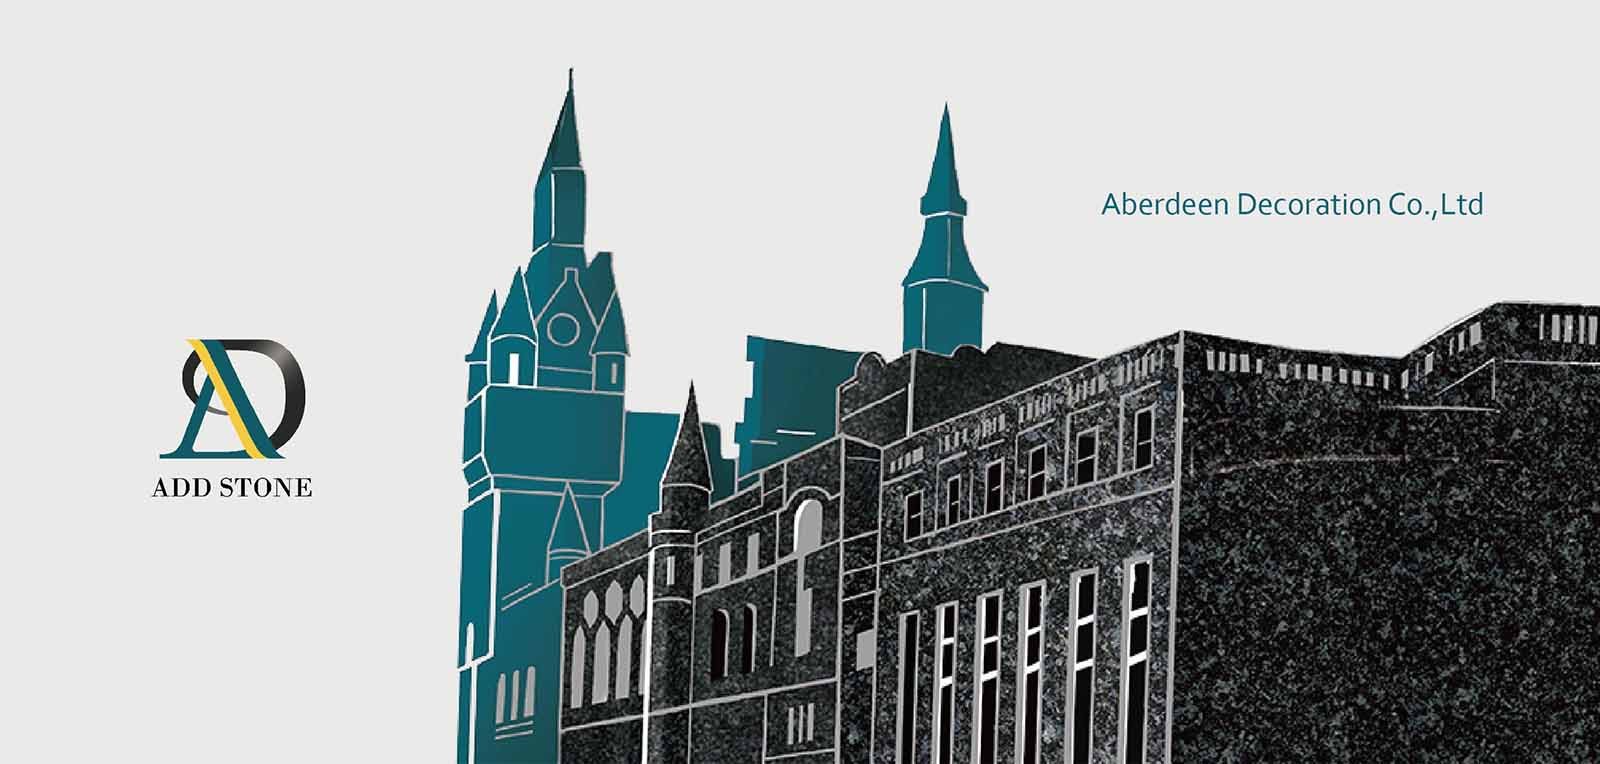 Aberdeen ถูกขนานนามว่าเป็นเมืองหินแกรนิตแห่งสก็อตแลนด์และยังถูกเรียกว่าเมืองสีเงินอีกด้วย ซึ่งมีความหมายไปในทางการพัฒนาในด้านของความงดงามและความมั่งคั่งจึงถูกนำมาตั้งเป็นชื่อบริษัท